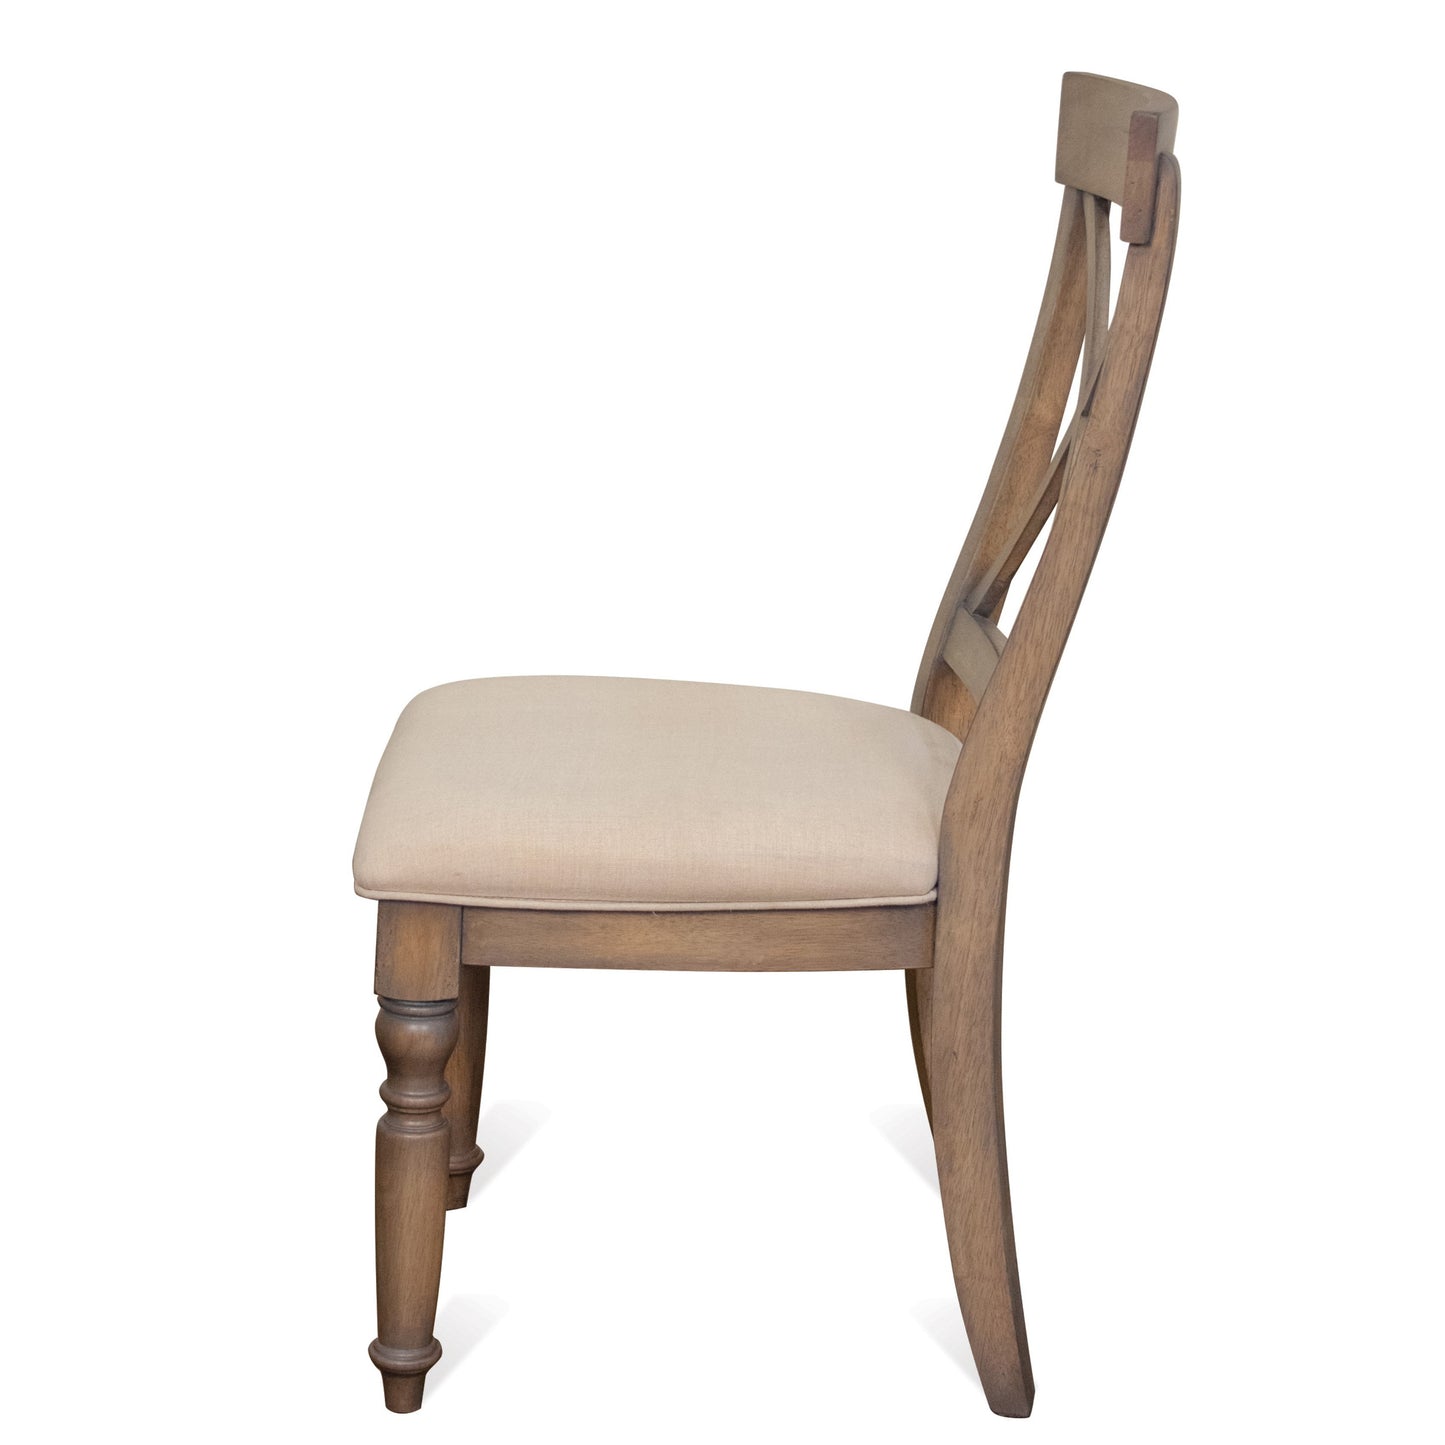 Trani Weathered Driftwood Finish Cross Back Dining Chairs, Set of 2